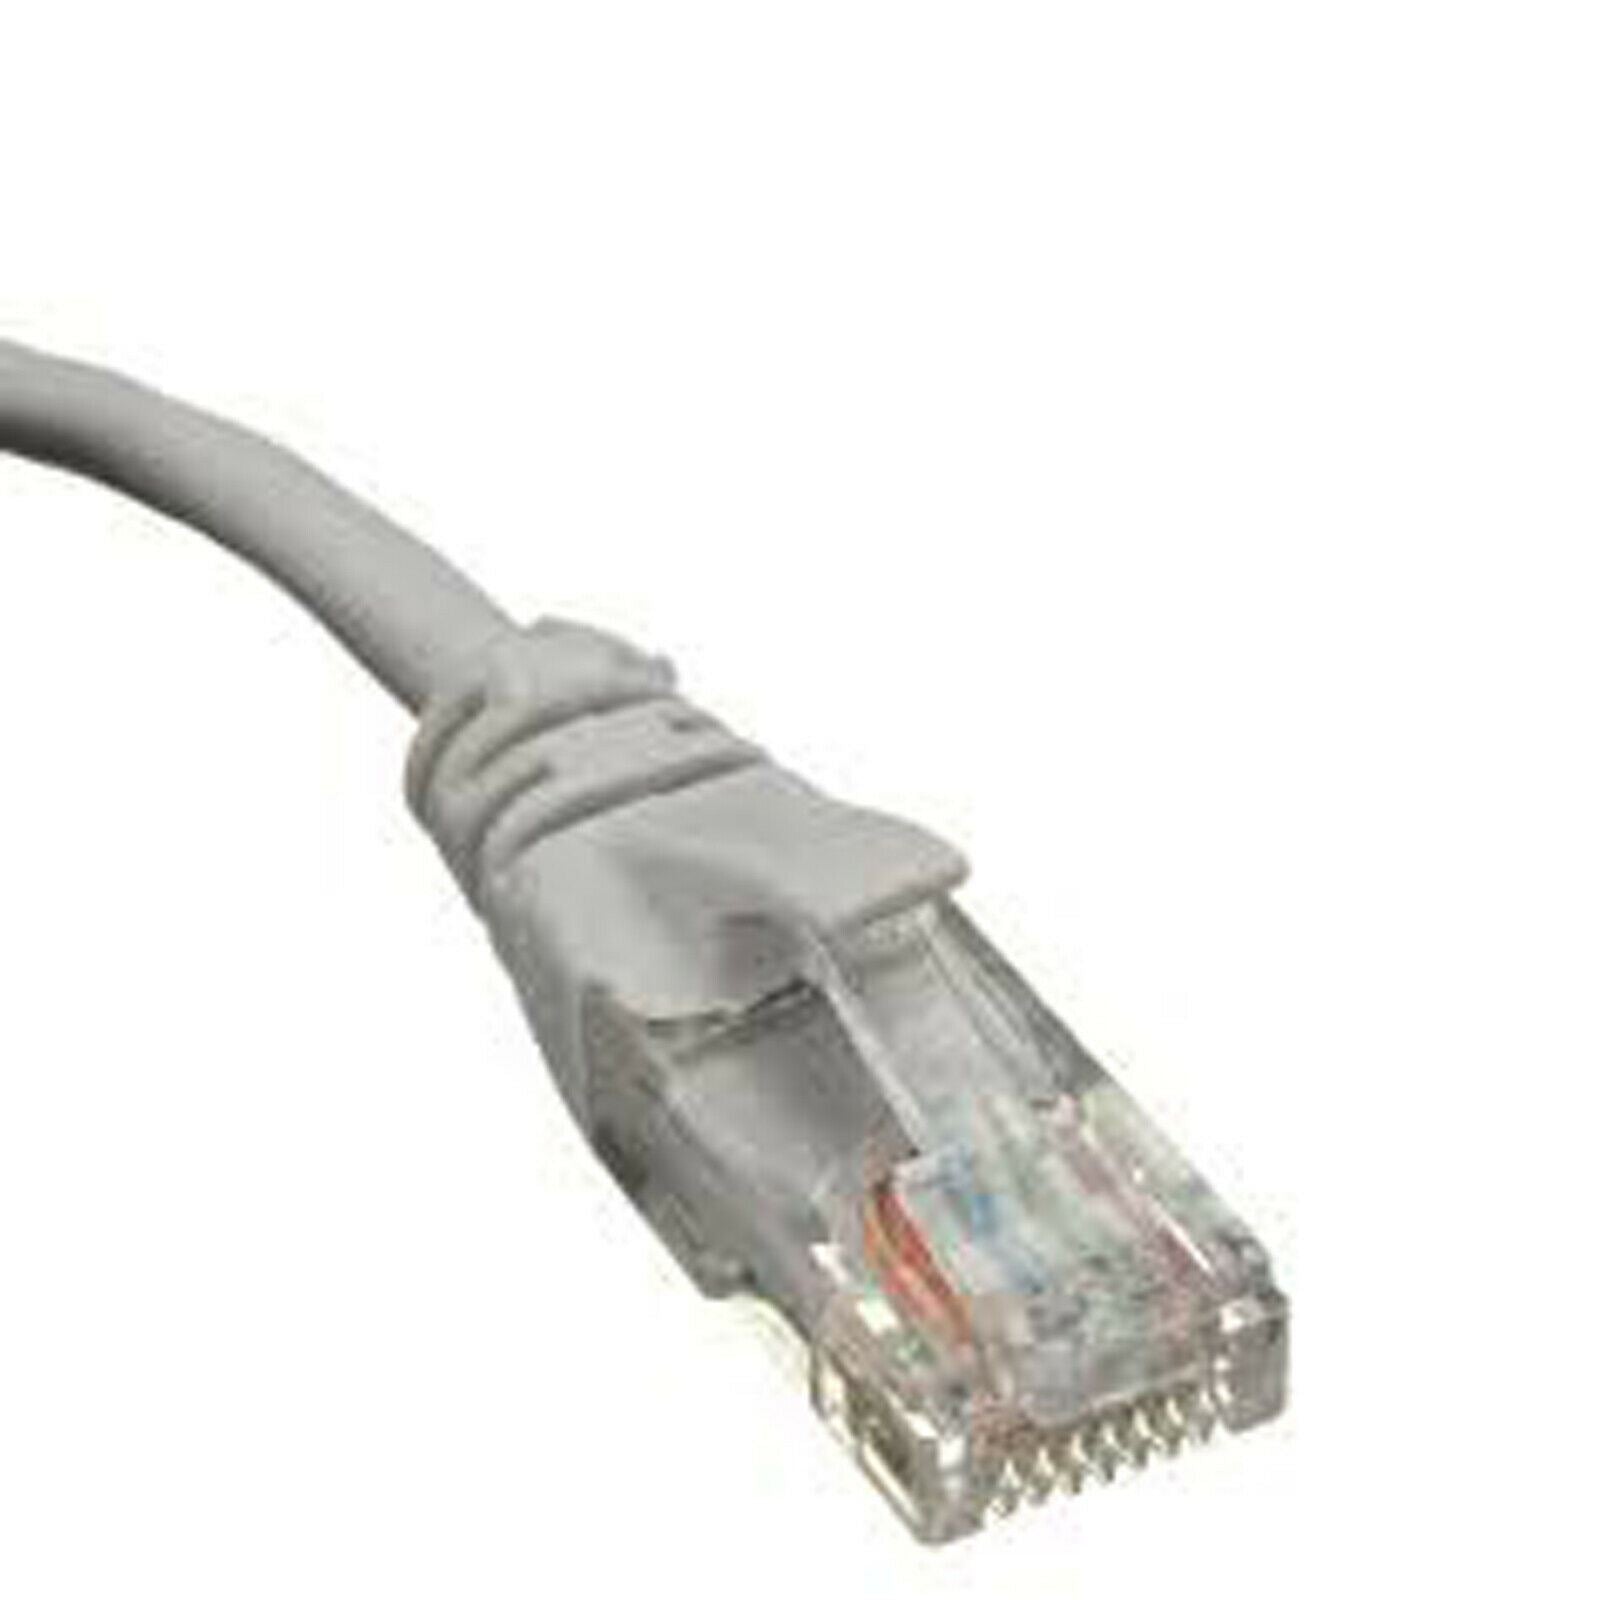  ENET Câble Ethernet OBD Code RJ45 Programmation Diagnostic